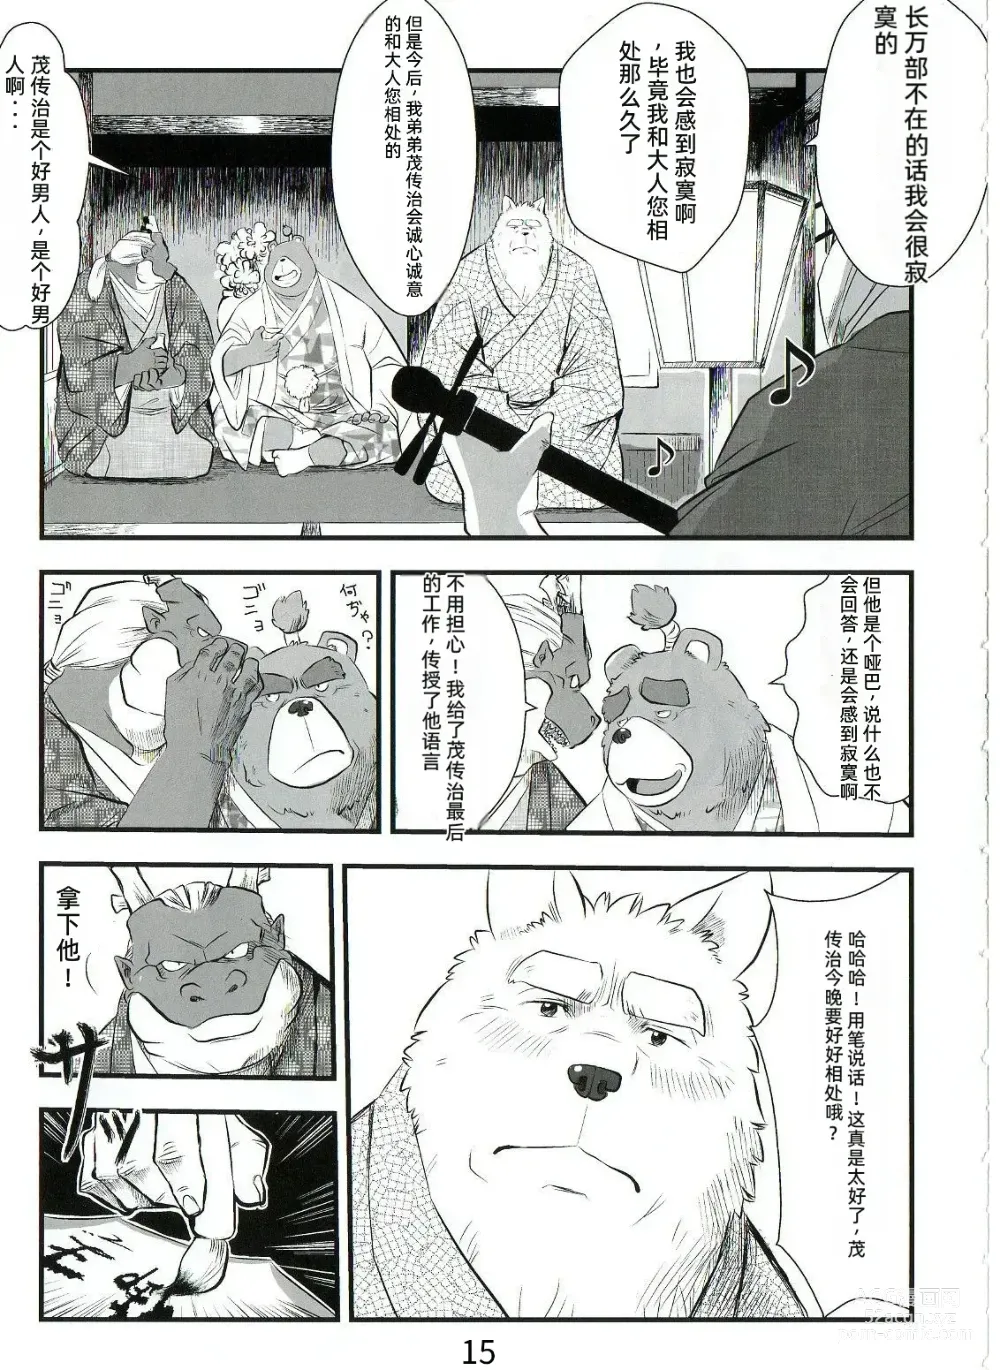 Page 14 of doujinshi 兽之楼郭 月华缭乱 月阴之章